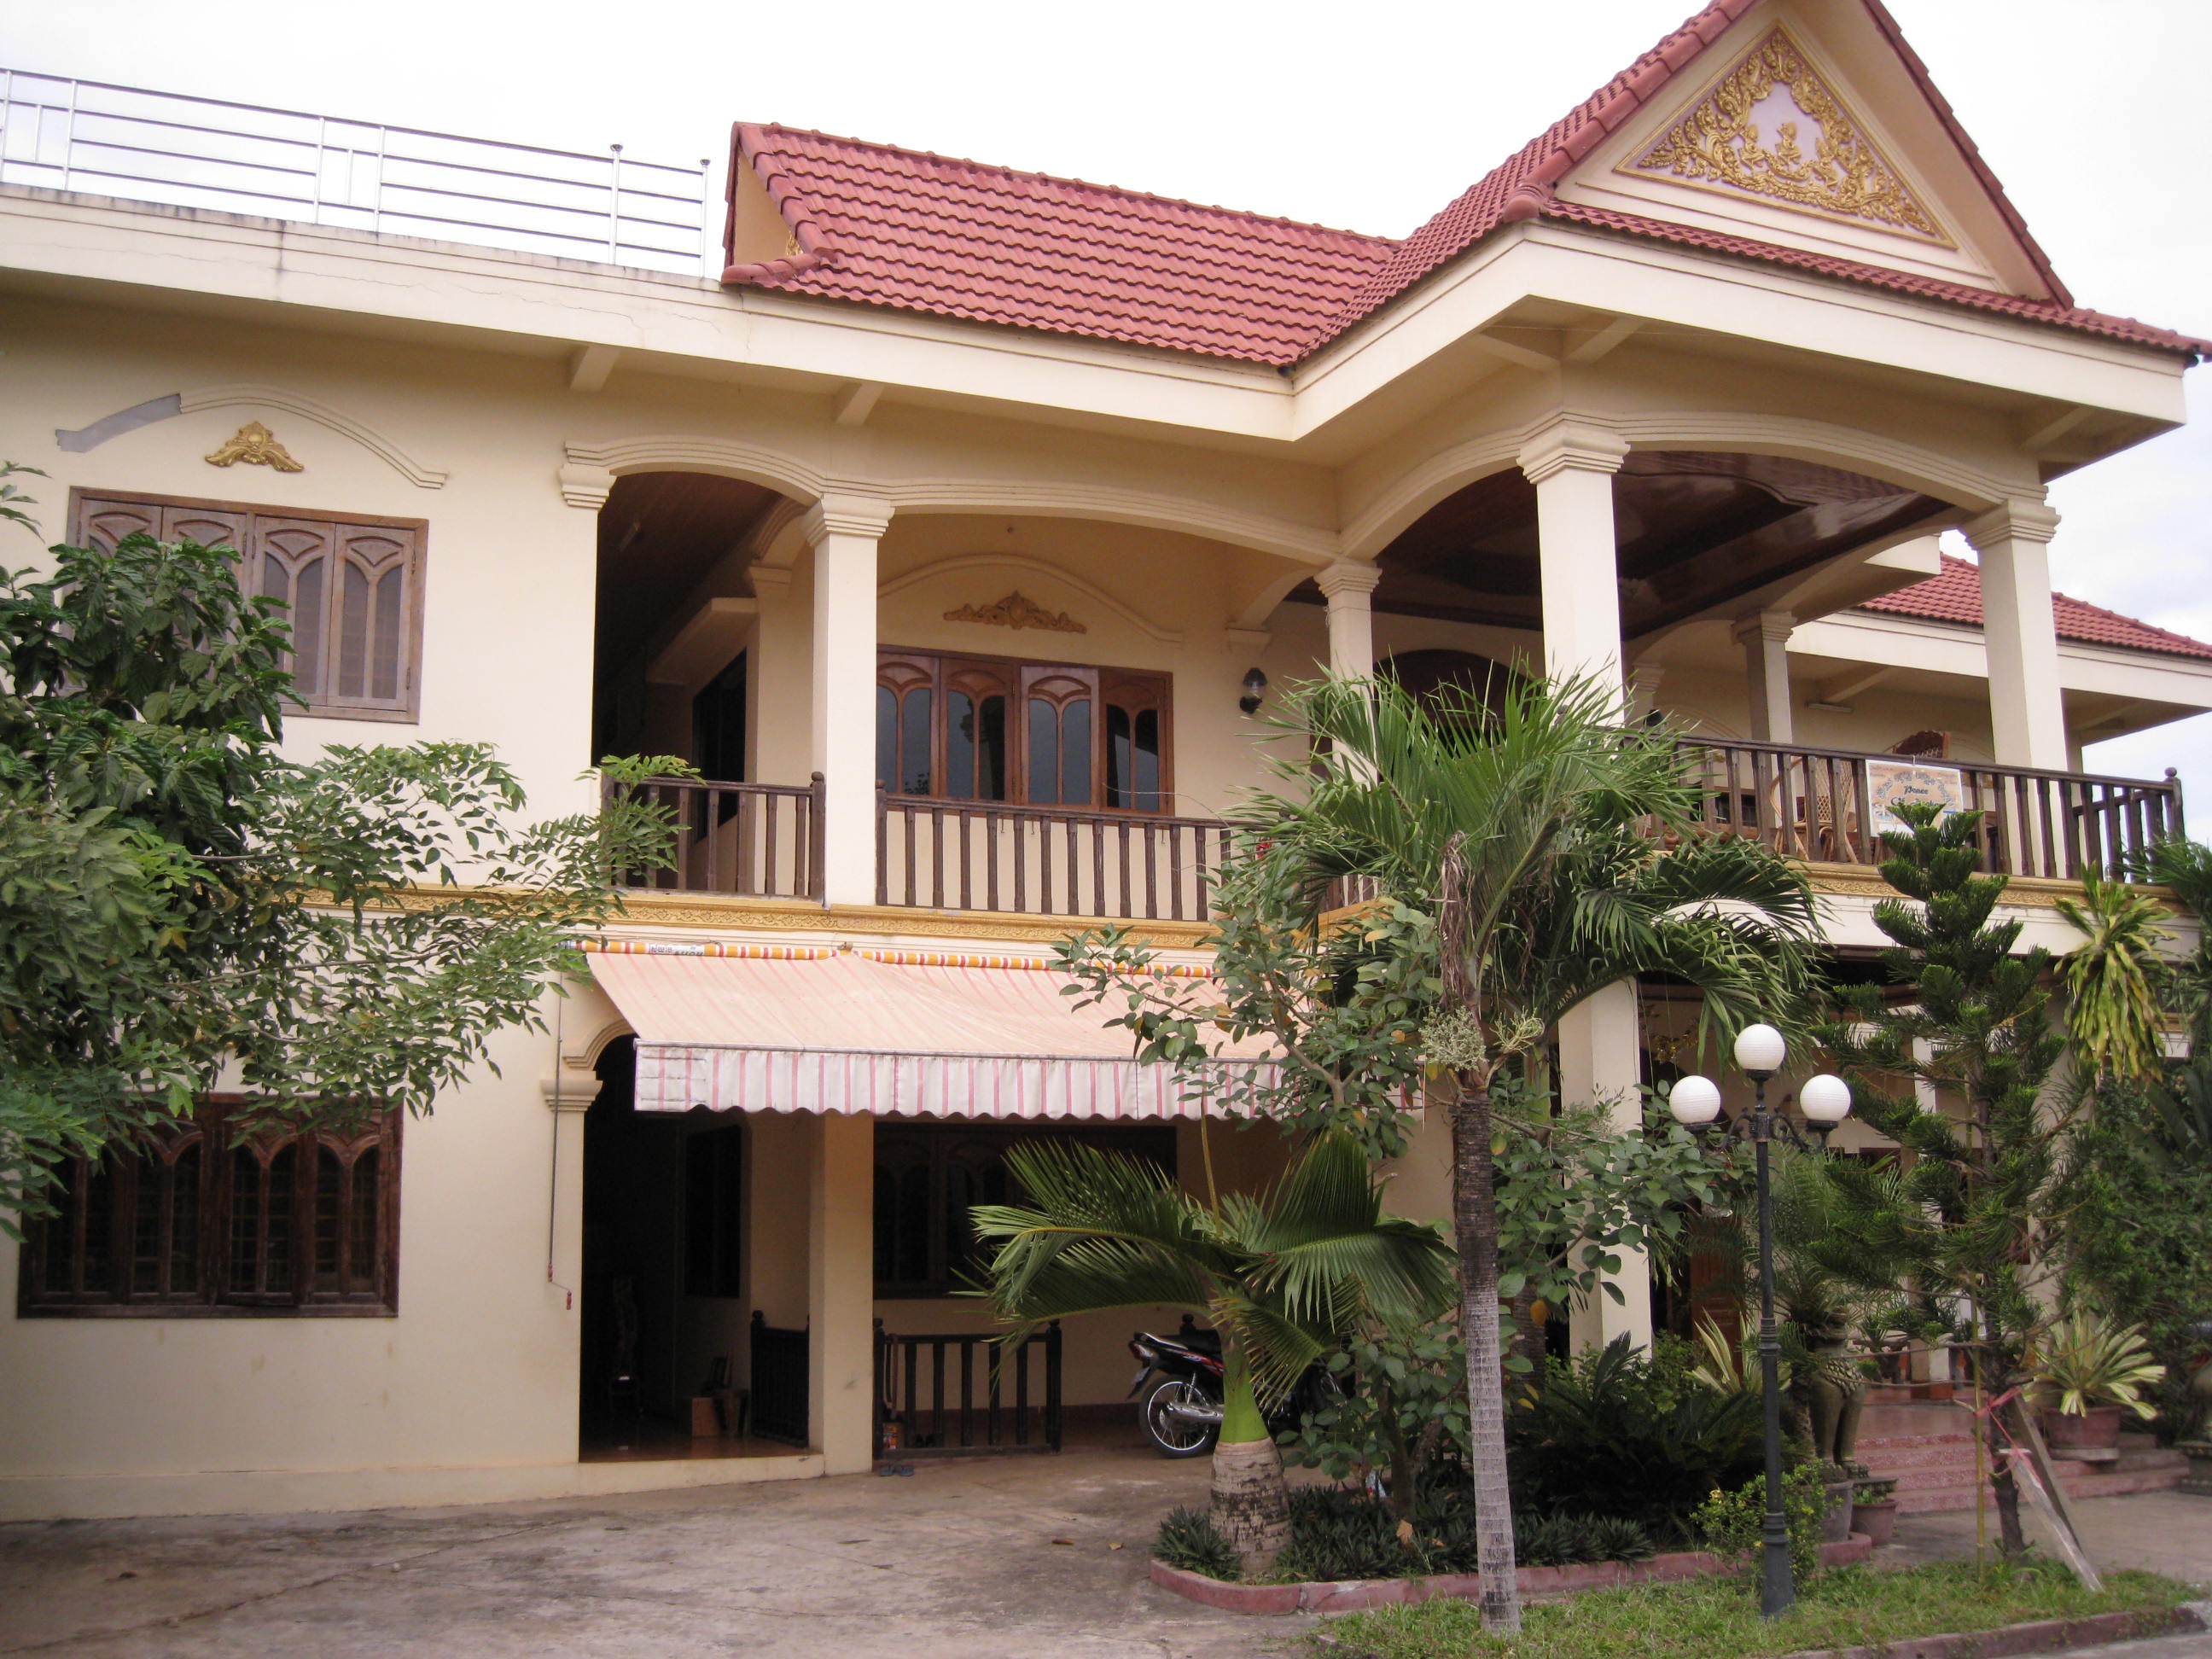 Peace of Ankgor Guest House, Siem Reap